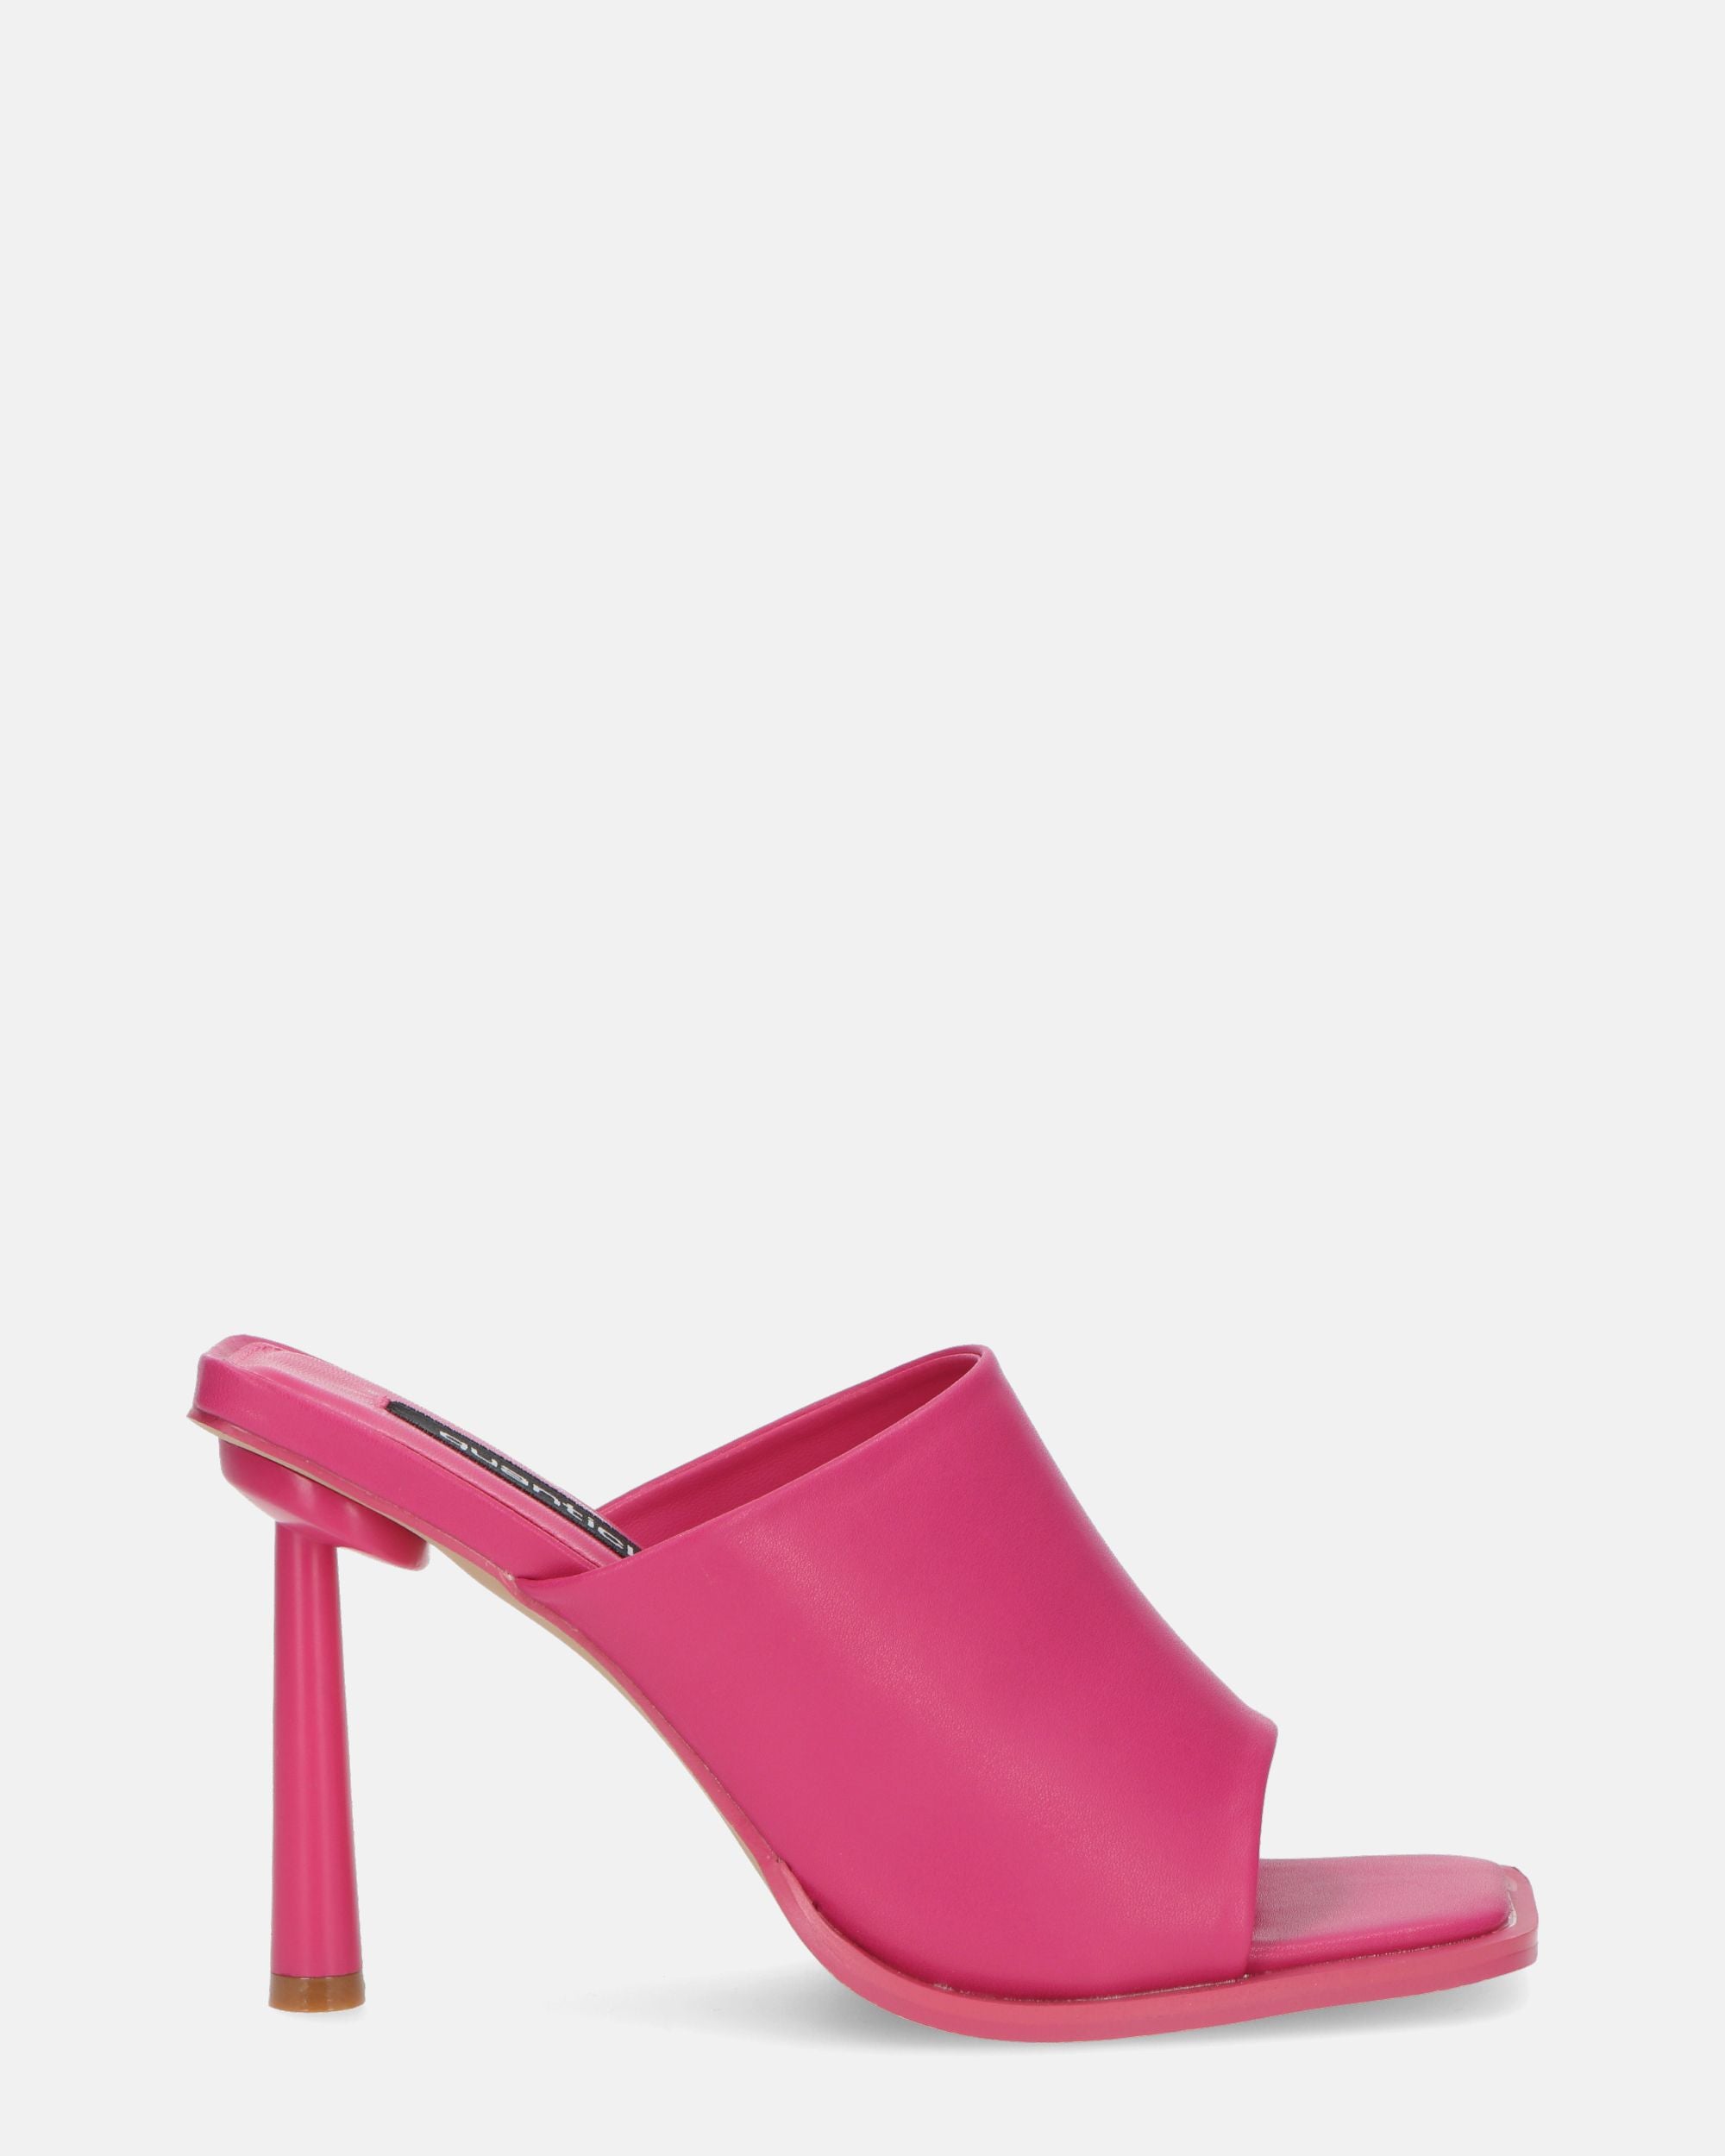 MIRANDA - fuchsia shoes with stiletto heels